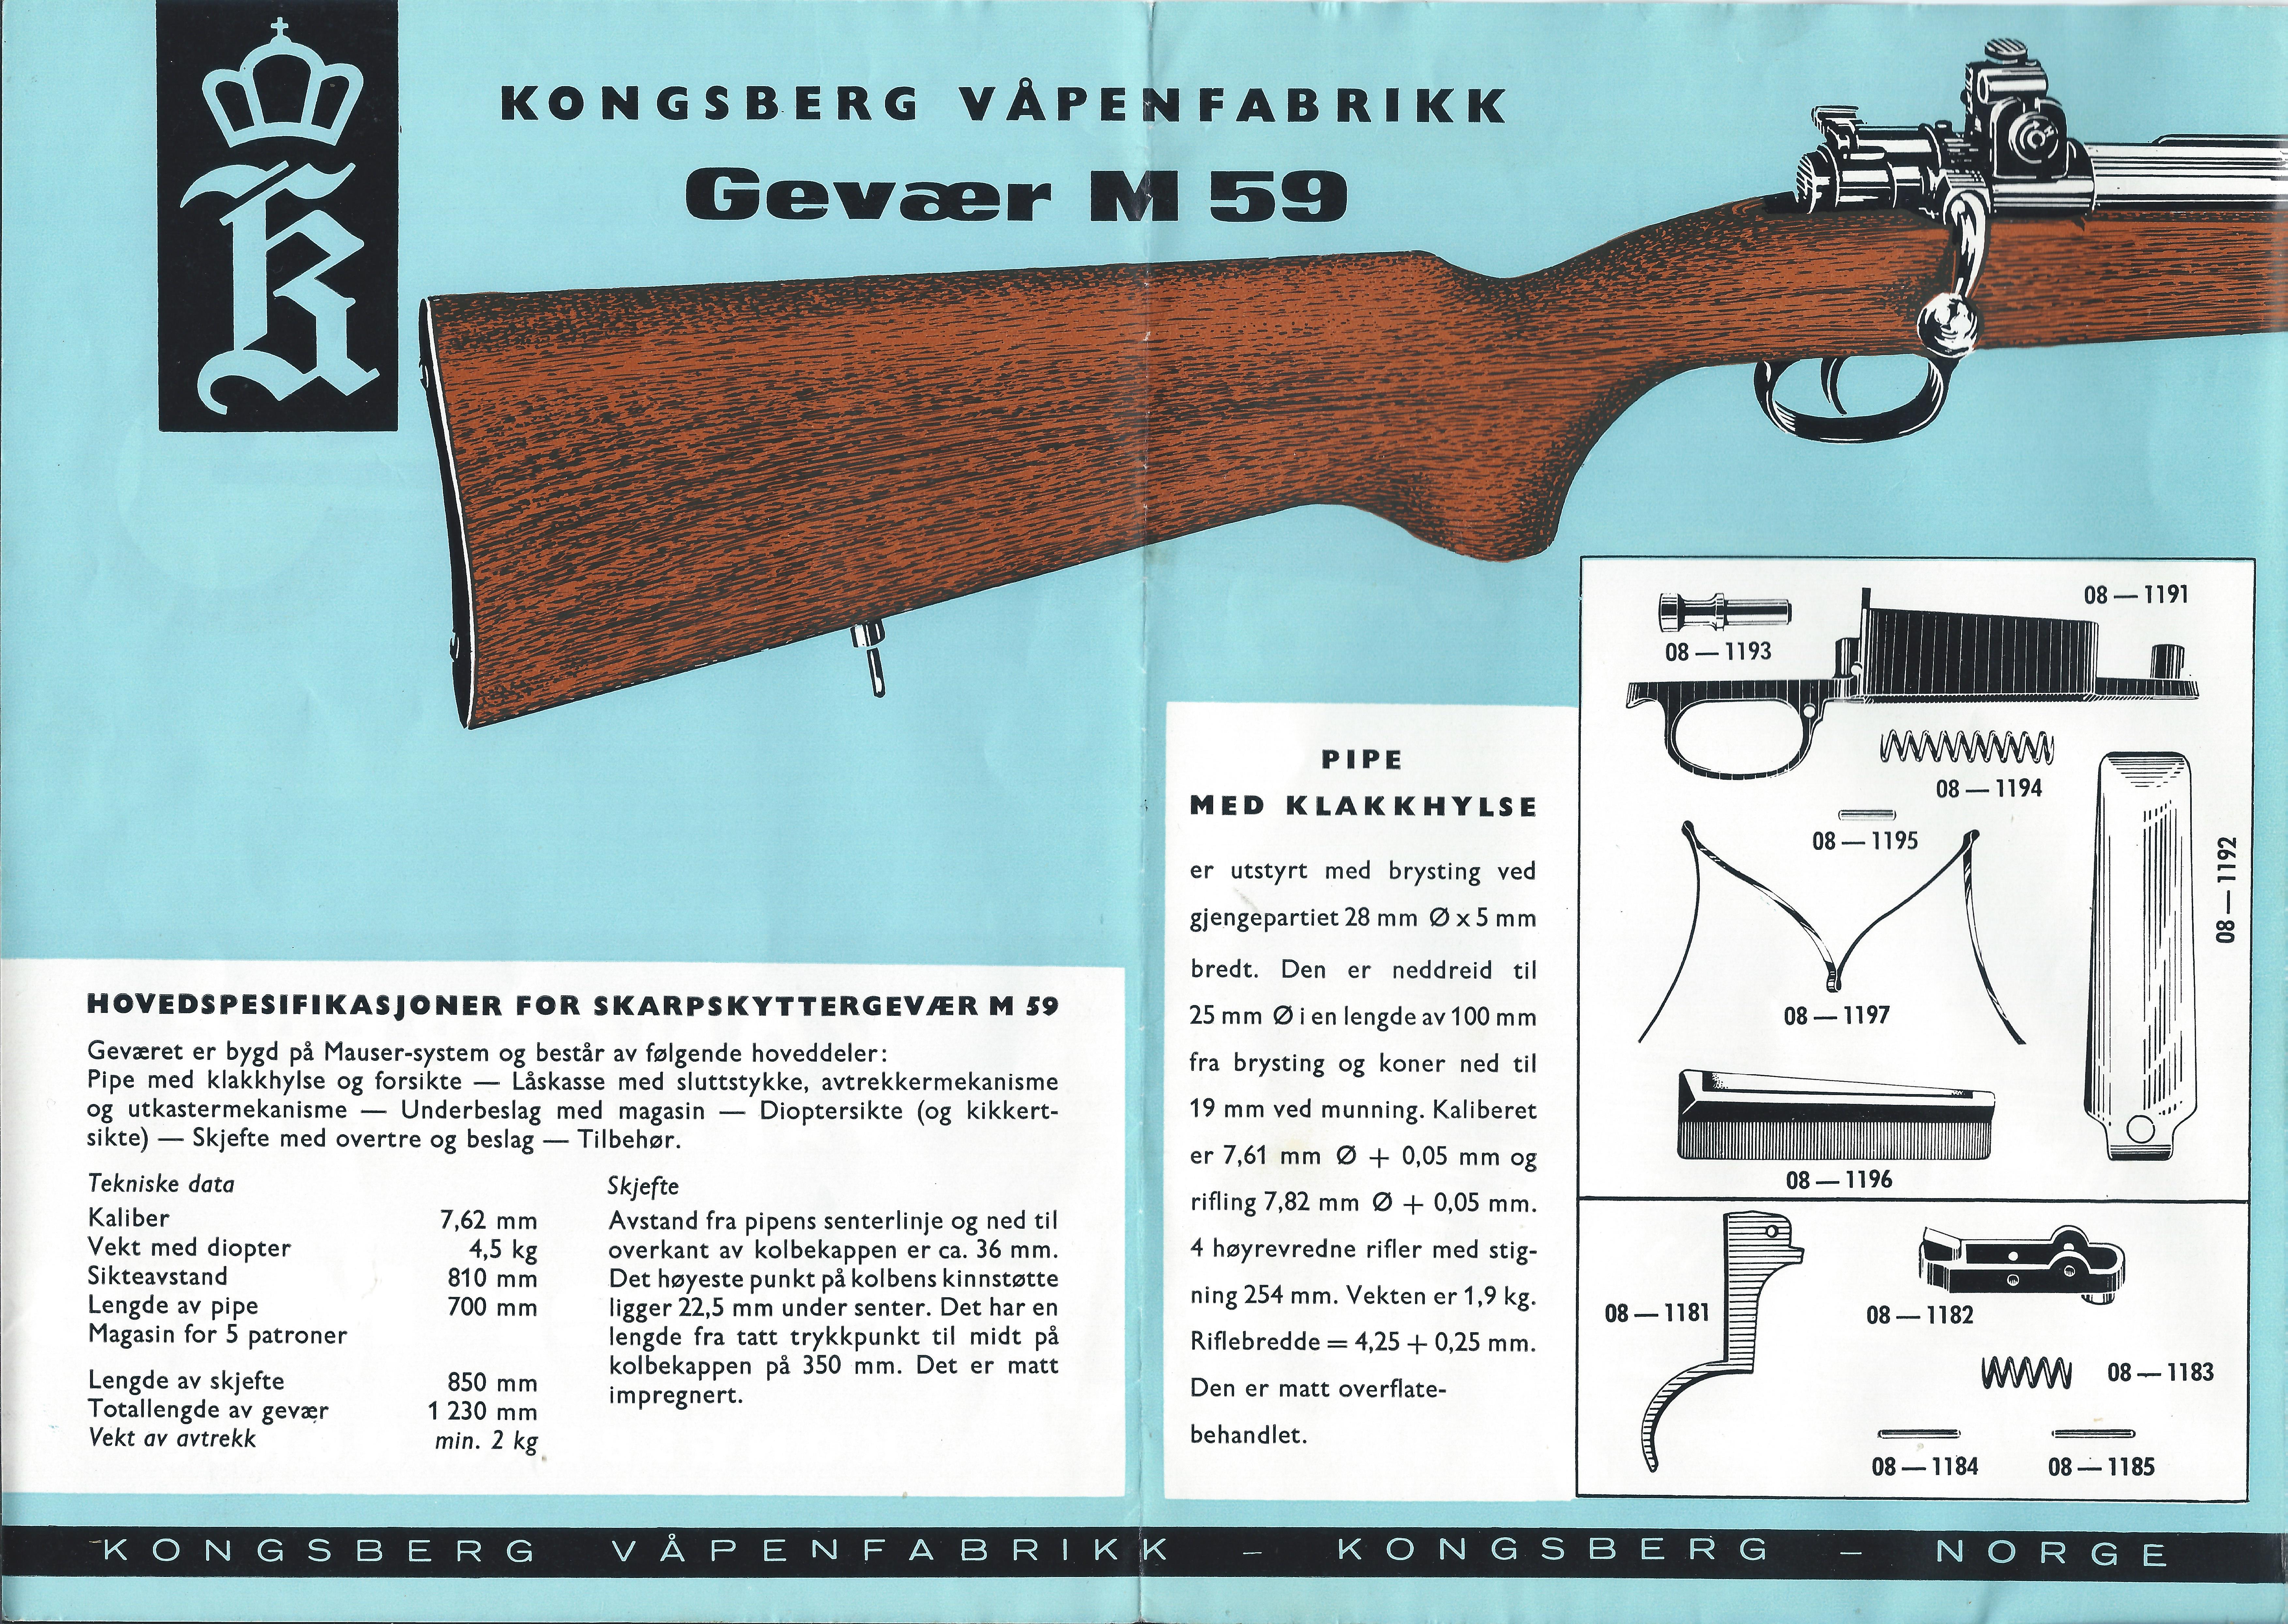 ./guns/rifle/bilder/Rifle-Kongsberg-Mauser-M59-Beskrivelse-2.jpg